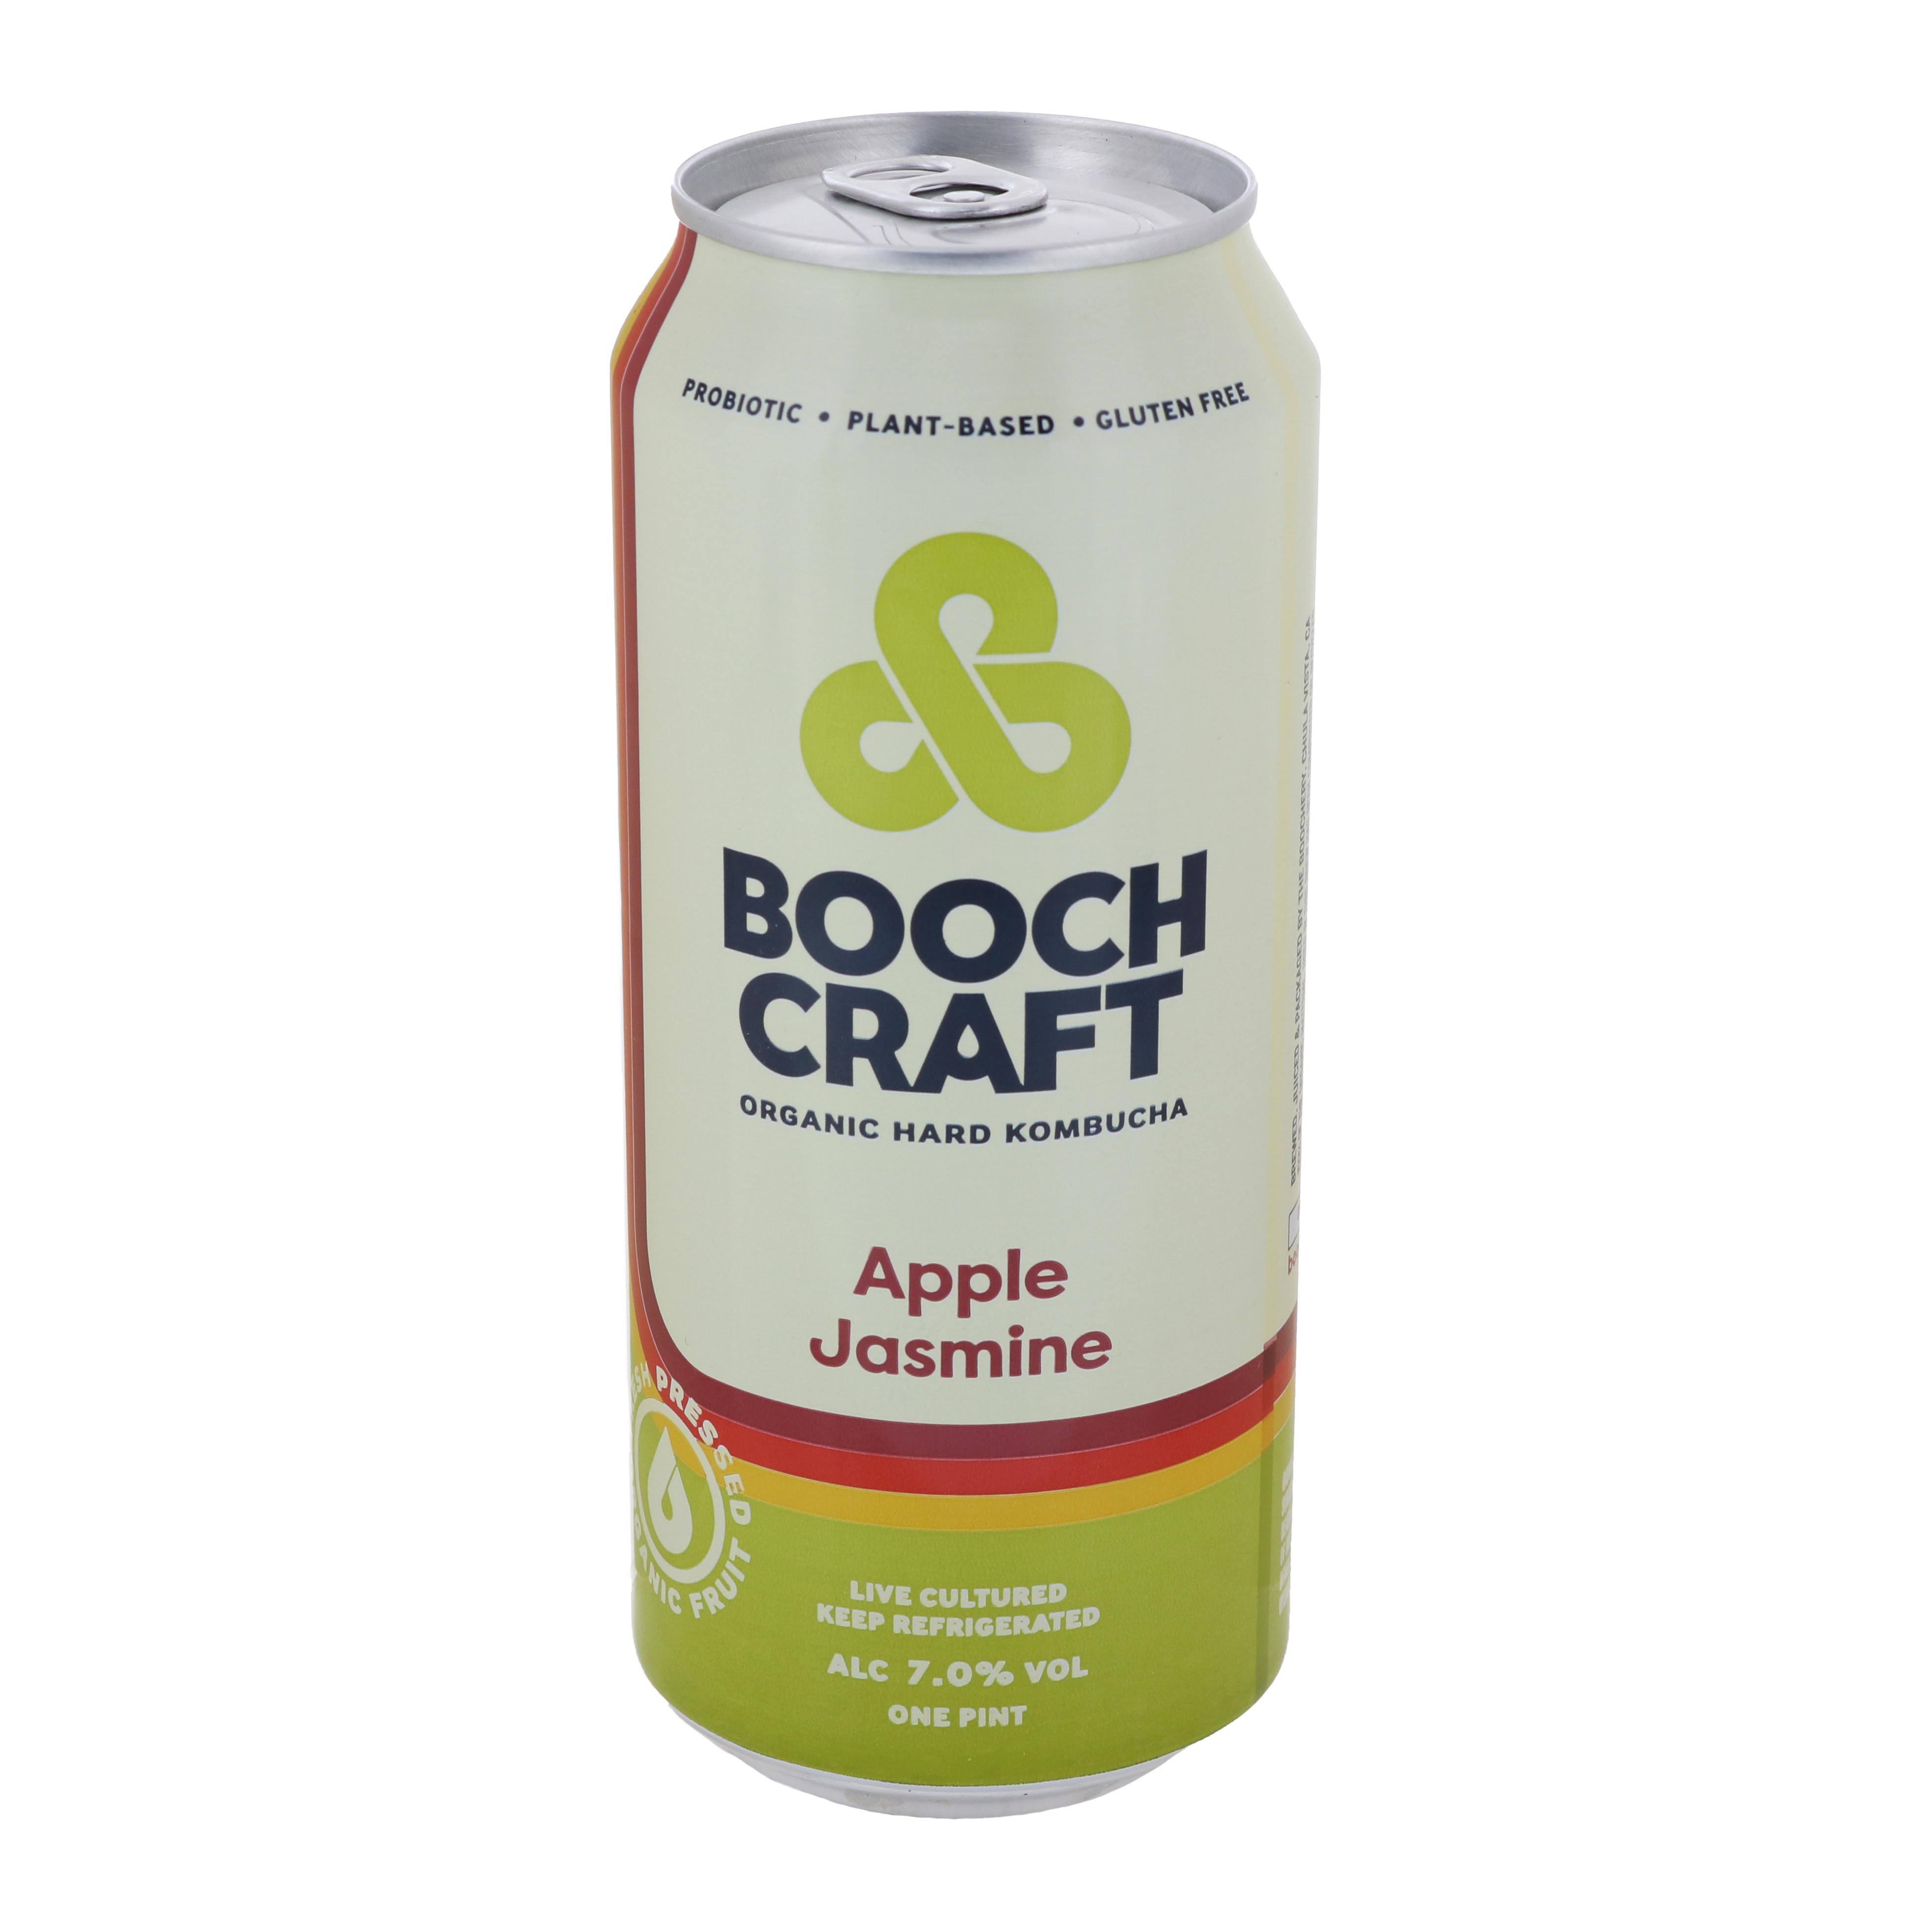 Boochcraft Hard Kombucha, Organic, Apple Jasmine - one pint